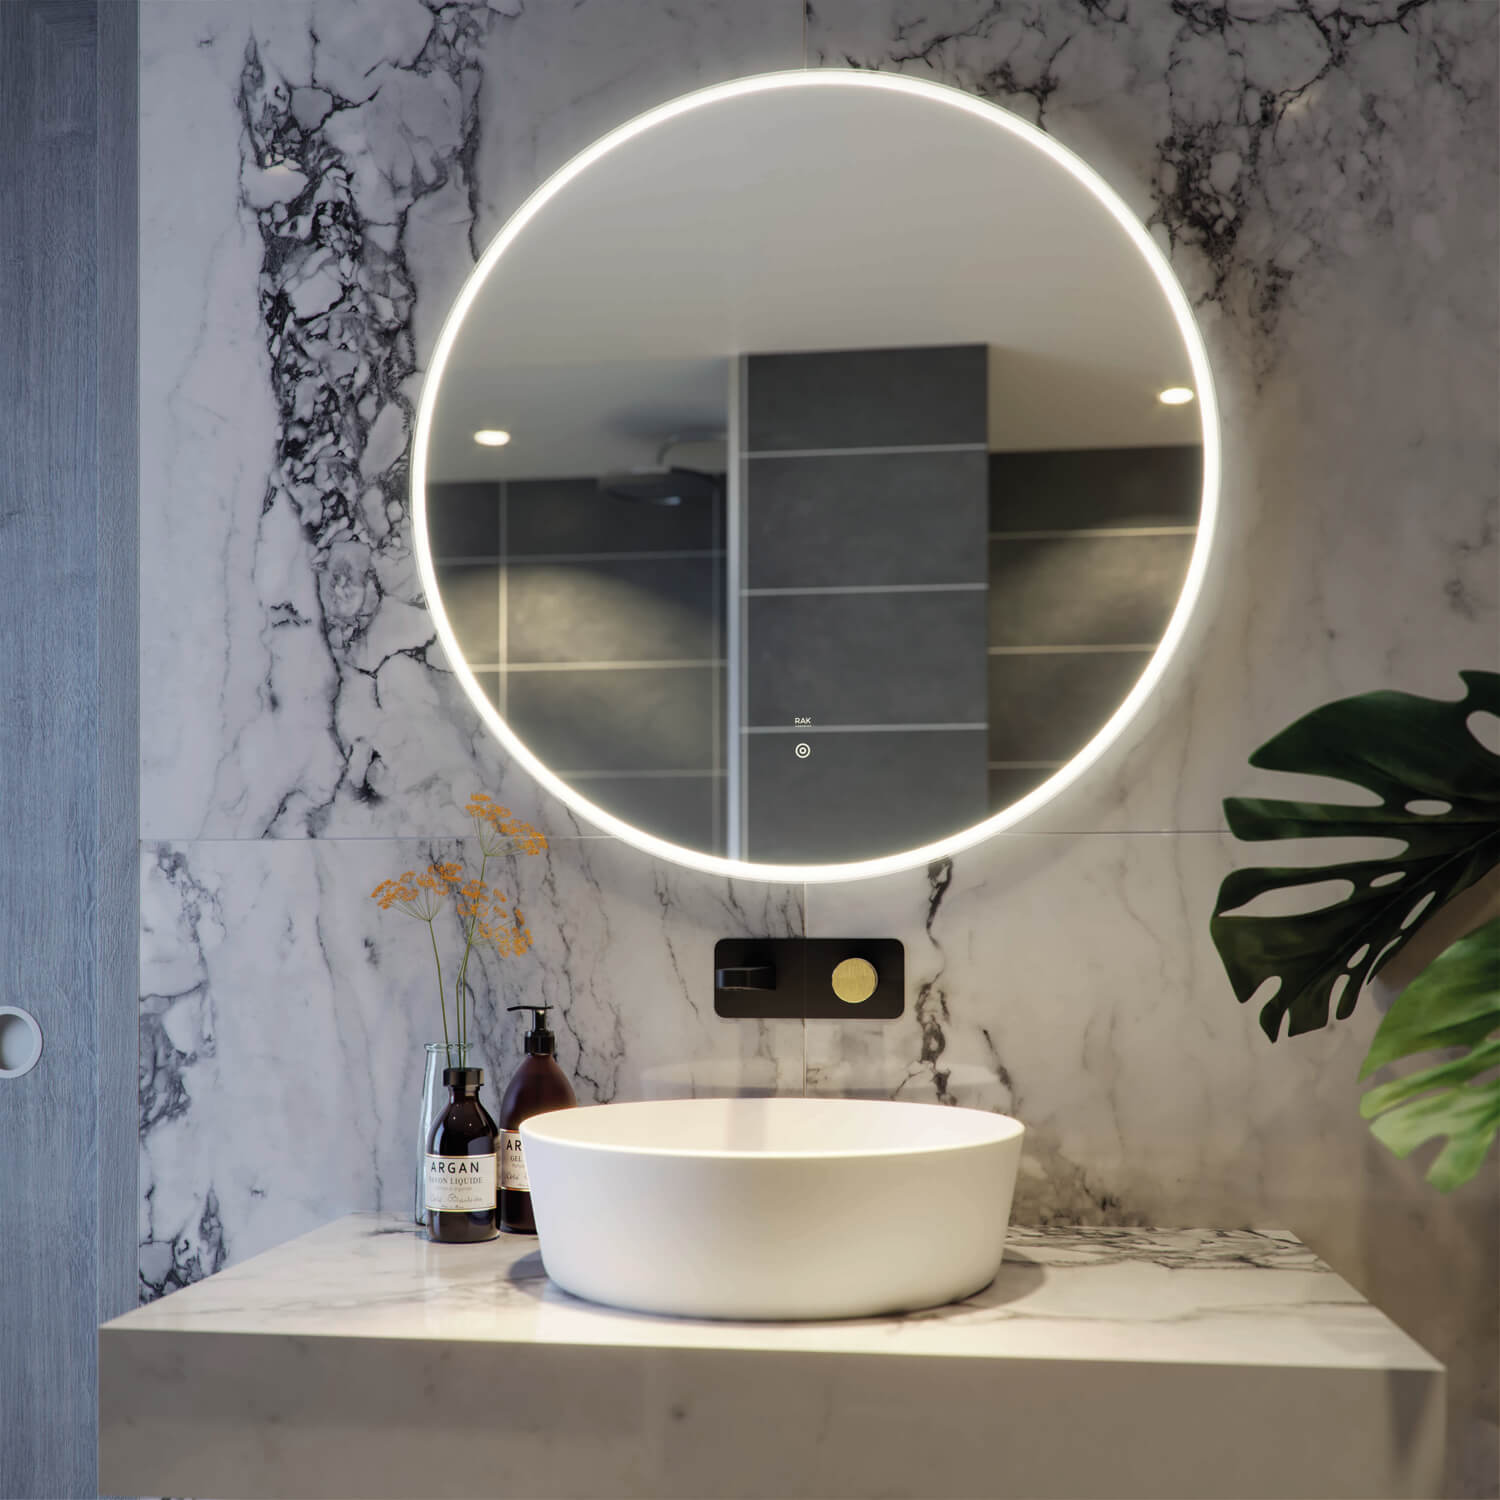 Rak Scorpio 800 X 800mm Led Illuminated, Round Bathroom Mirror With Storage